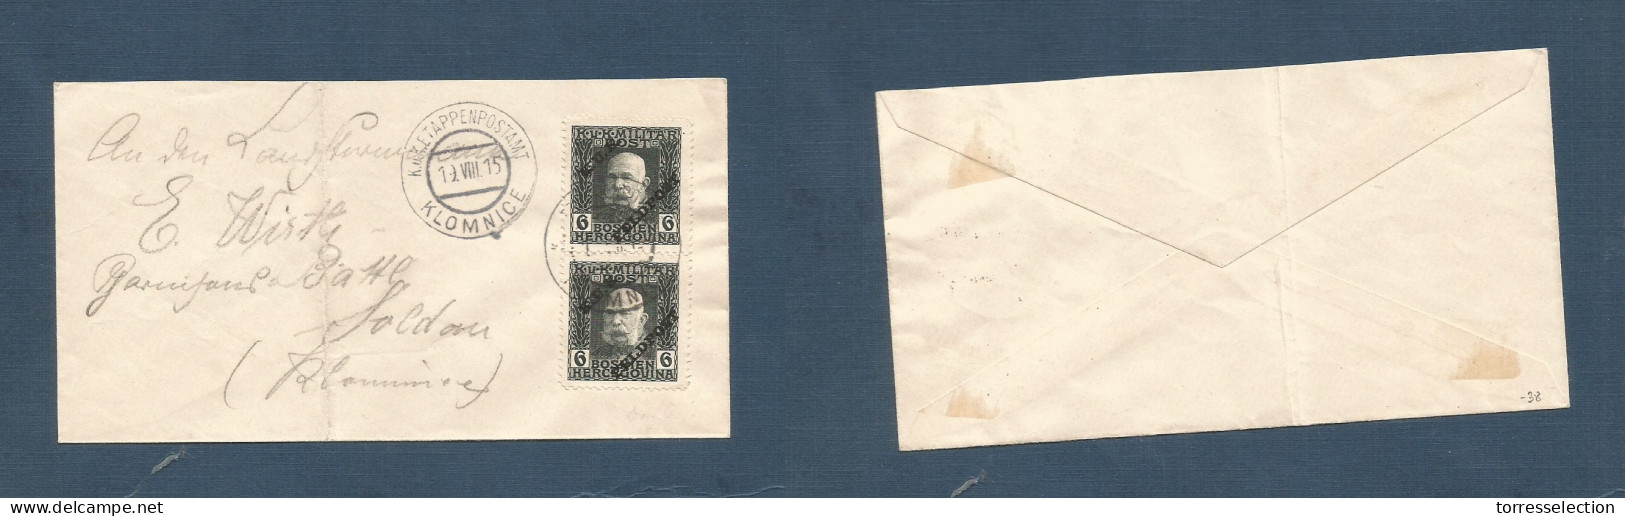 BOSNIA. 1915 (19 Aug) Klomnice Local Multifkd Issue Envelope 12k Rate, Tied Cds. XSALE. - Bosnien-Herzegowina